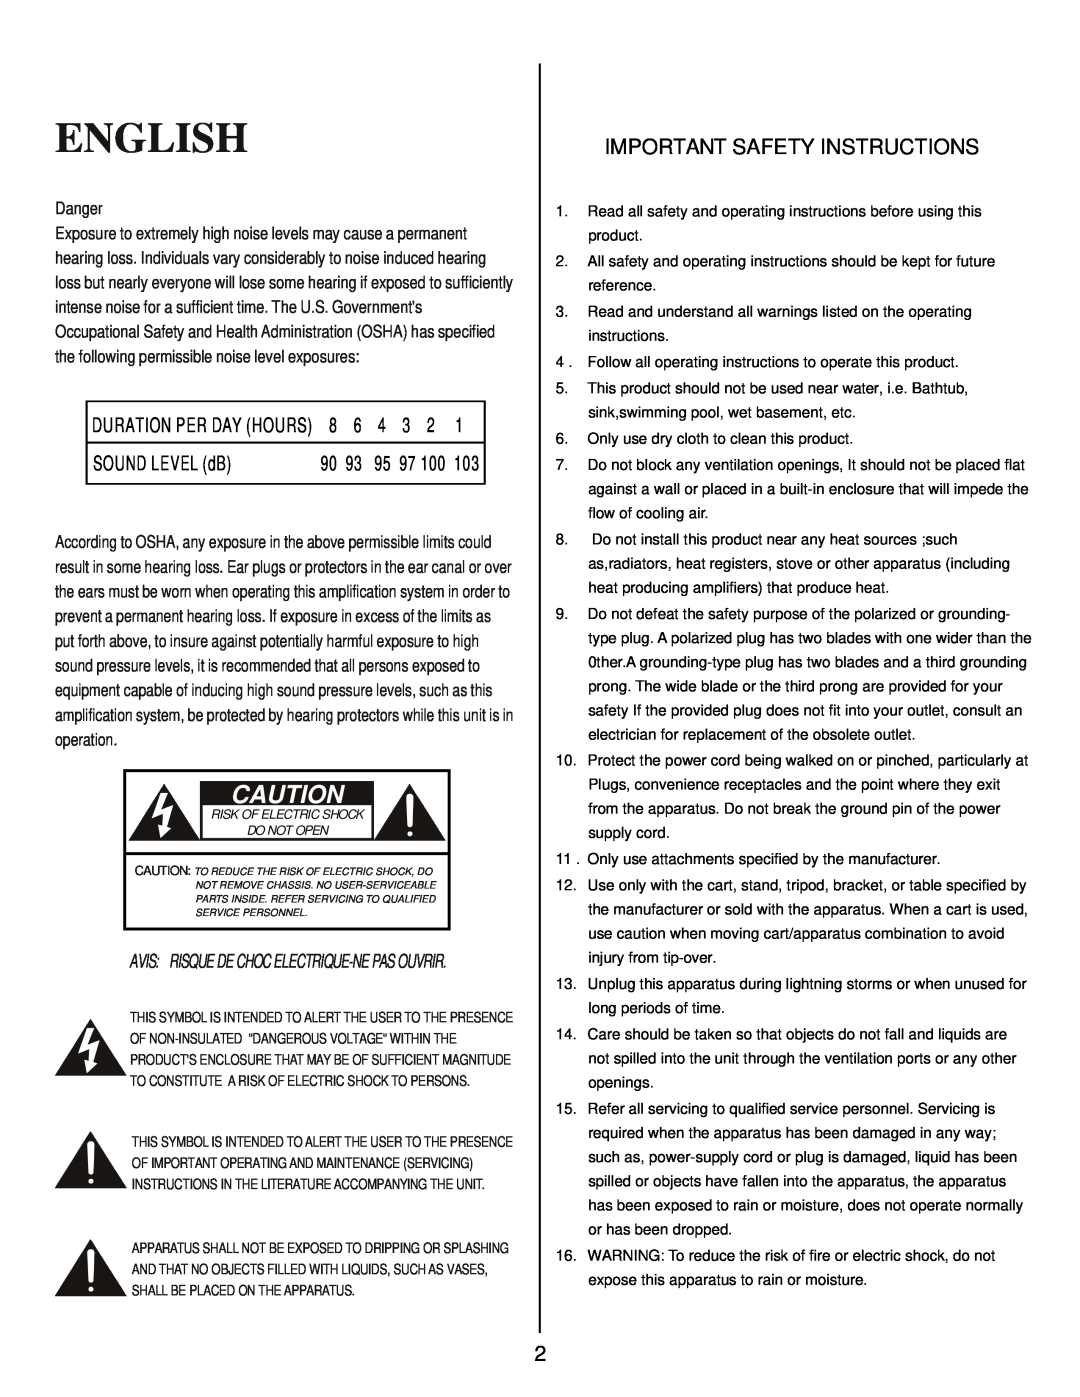 Kustom GROOVE 310C owner manual English, SOUND LEVEL dB, Danger, Important Safety Instructions 